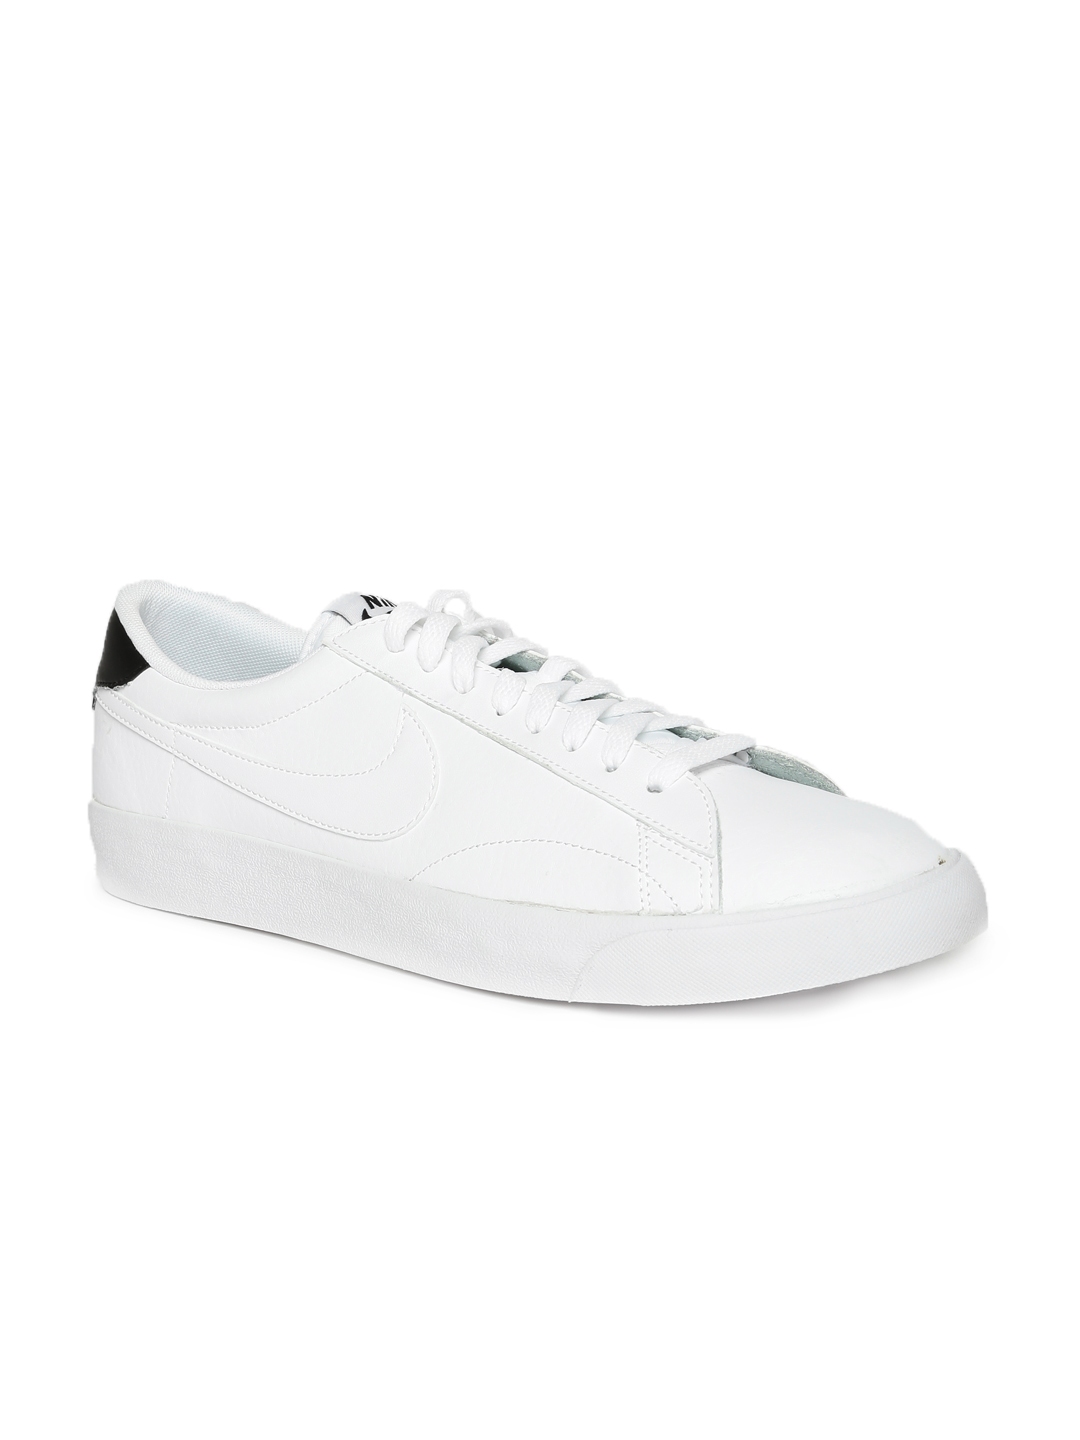 Buy Nike Men White Tennis Classic AC Sneakers - Casual Shoes for Men ...